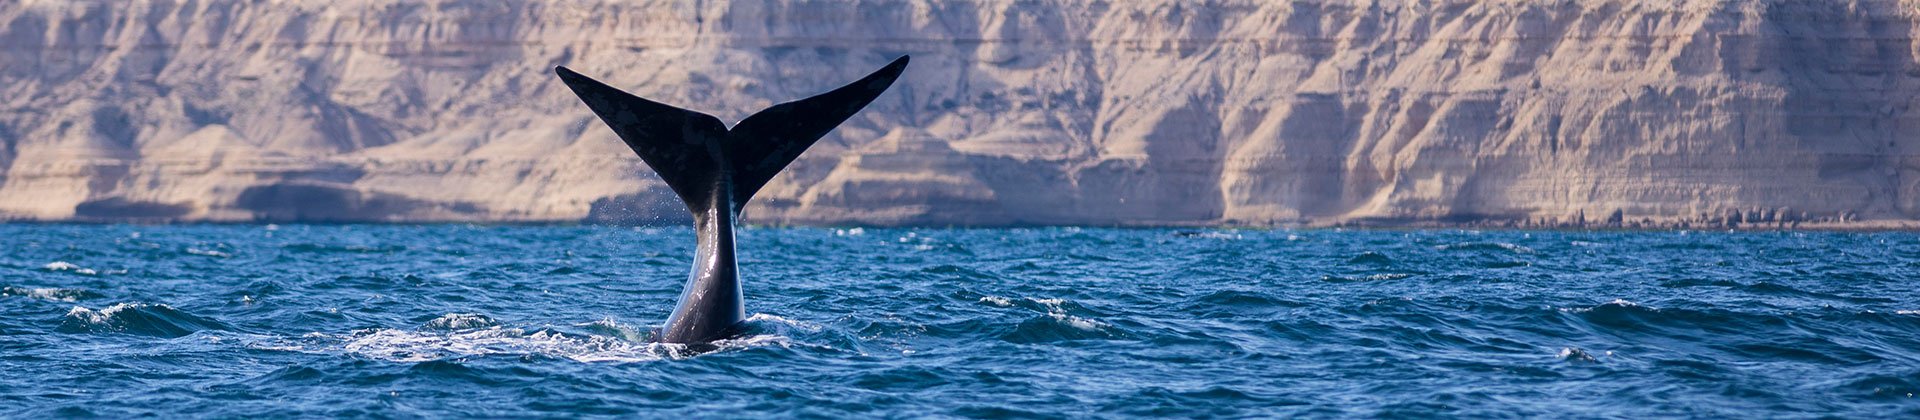 Peninsula Valdes whale